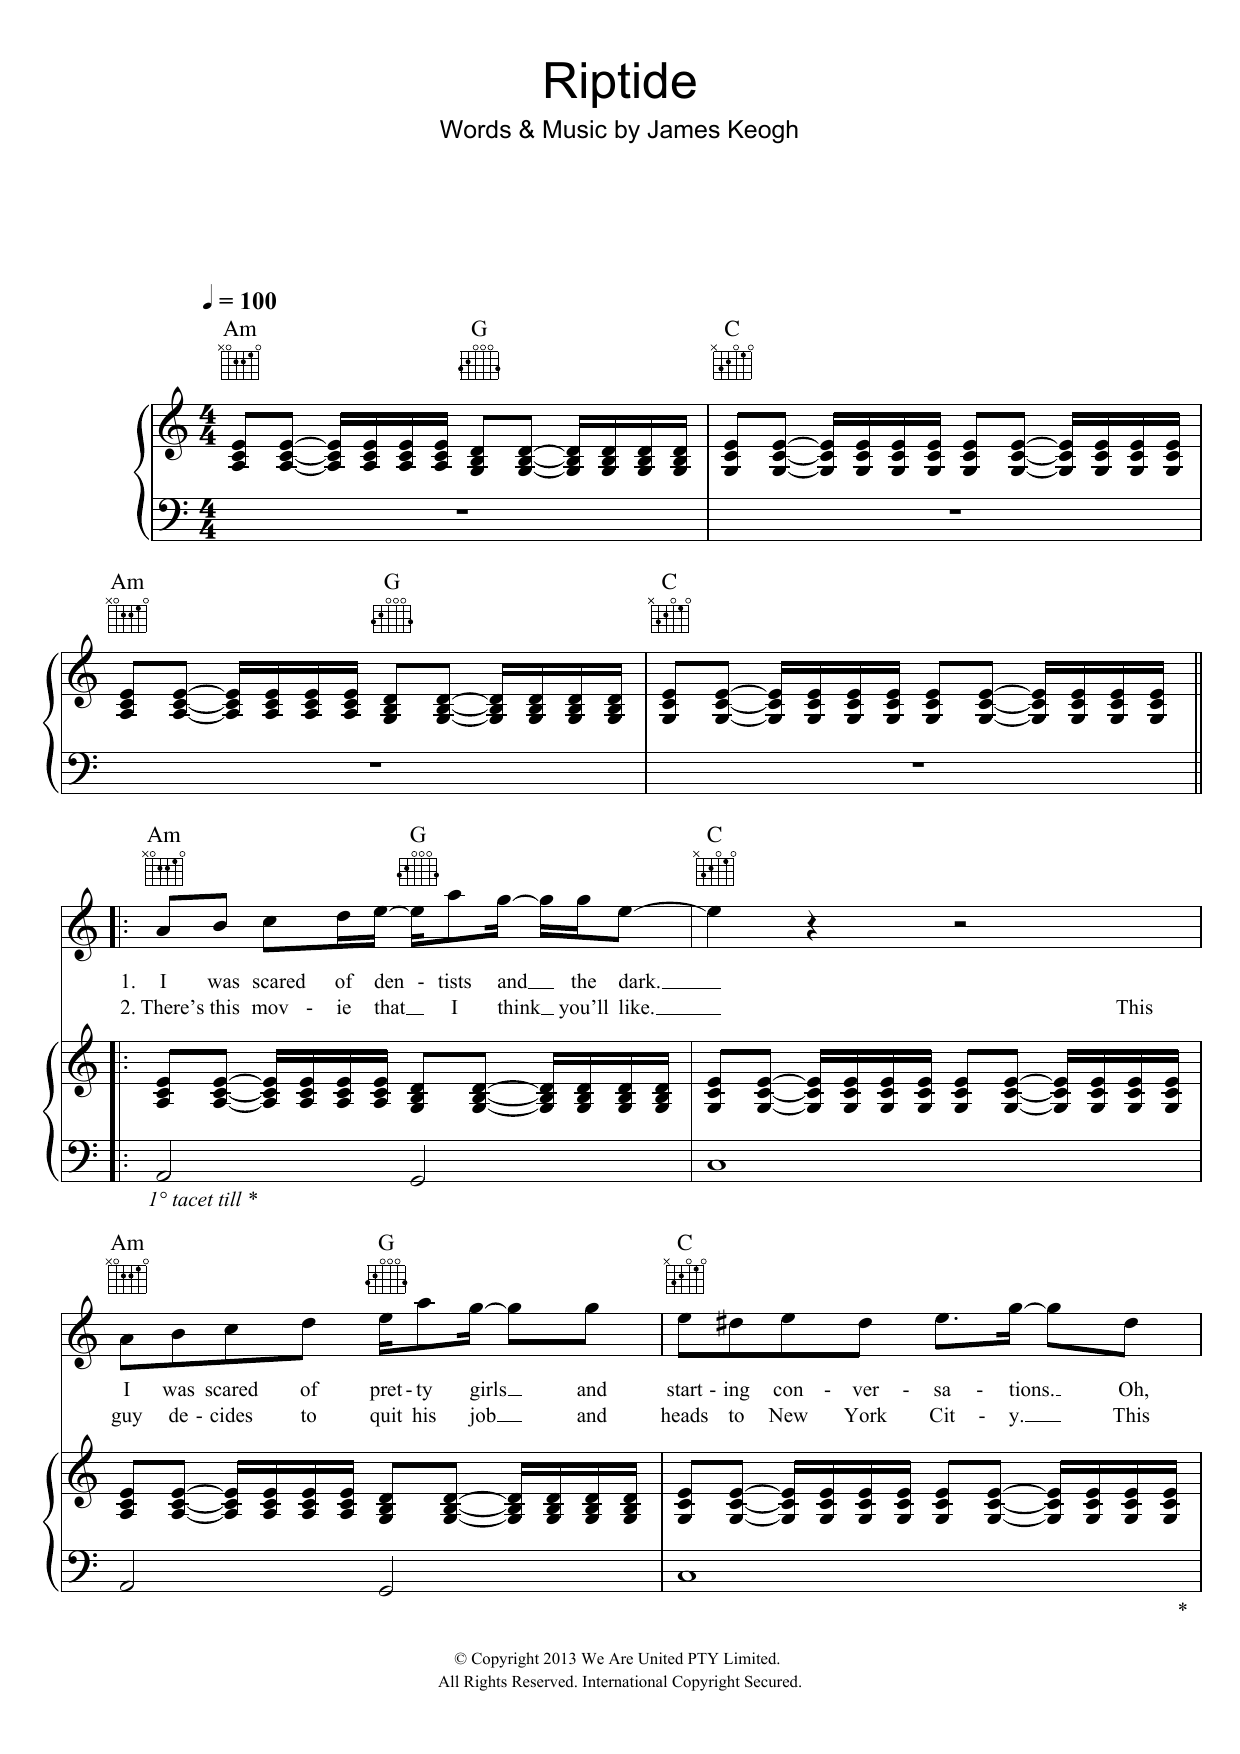 Vance Joy Riptide Sheet Music Notes & Chords for Guitar Lead Sheet - Download or Print PDF